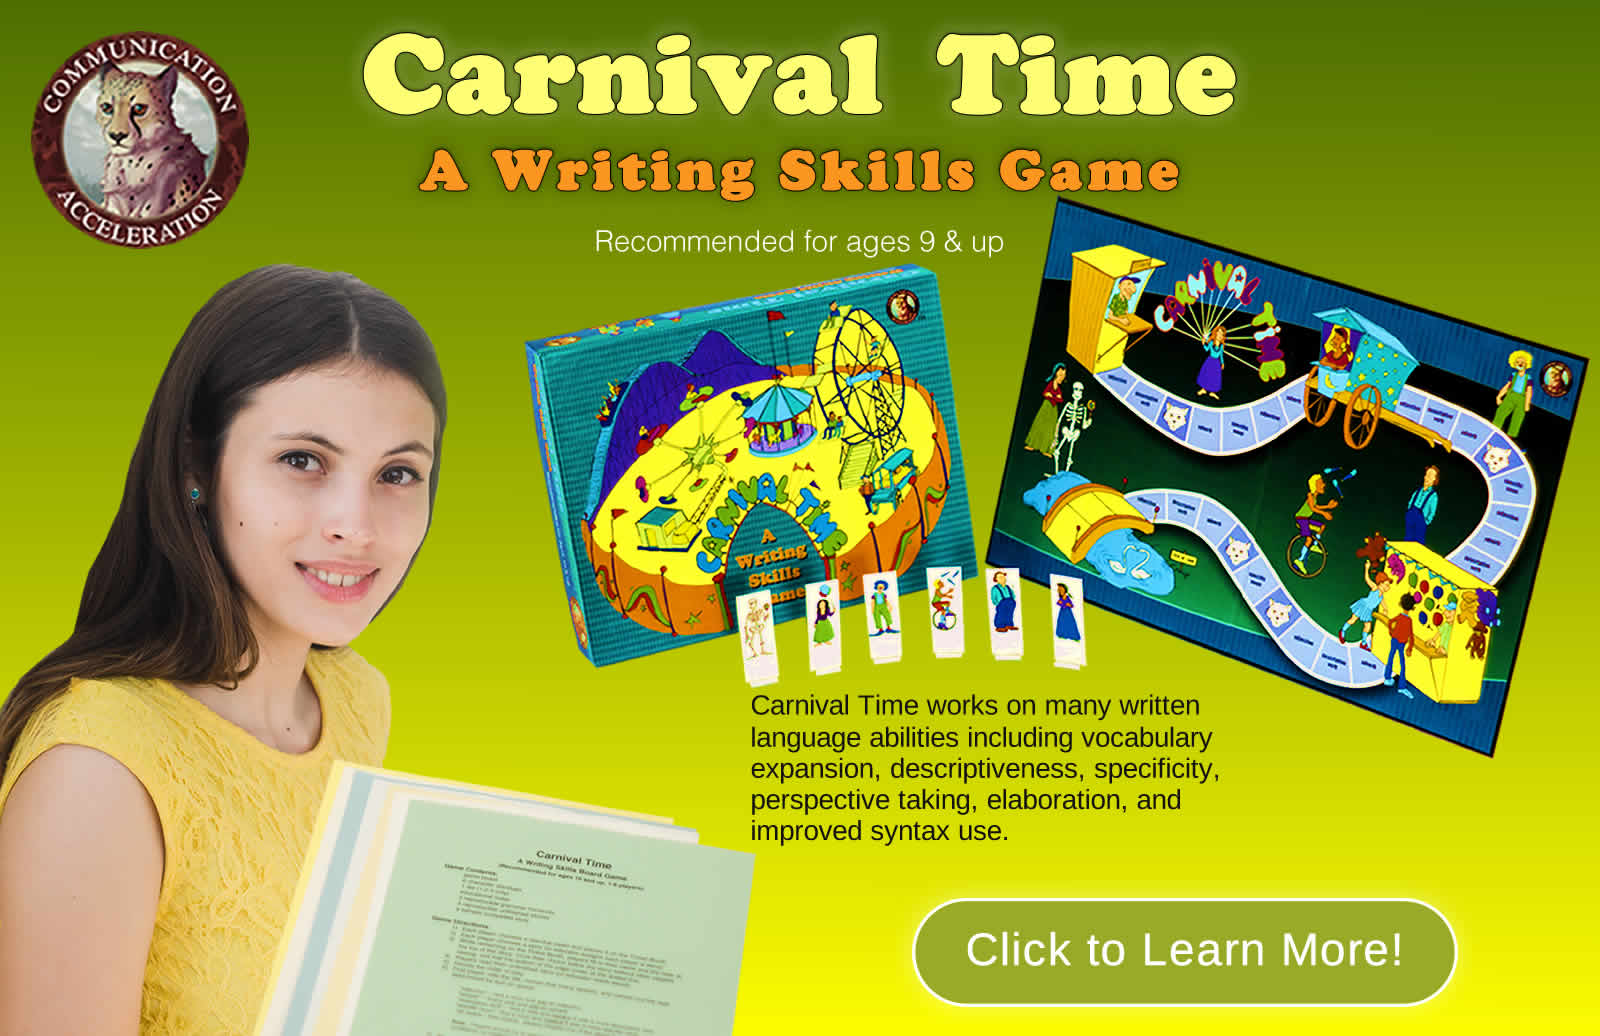 Carnival Time Writing Skills Game Advertisement